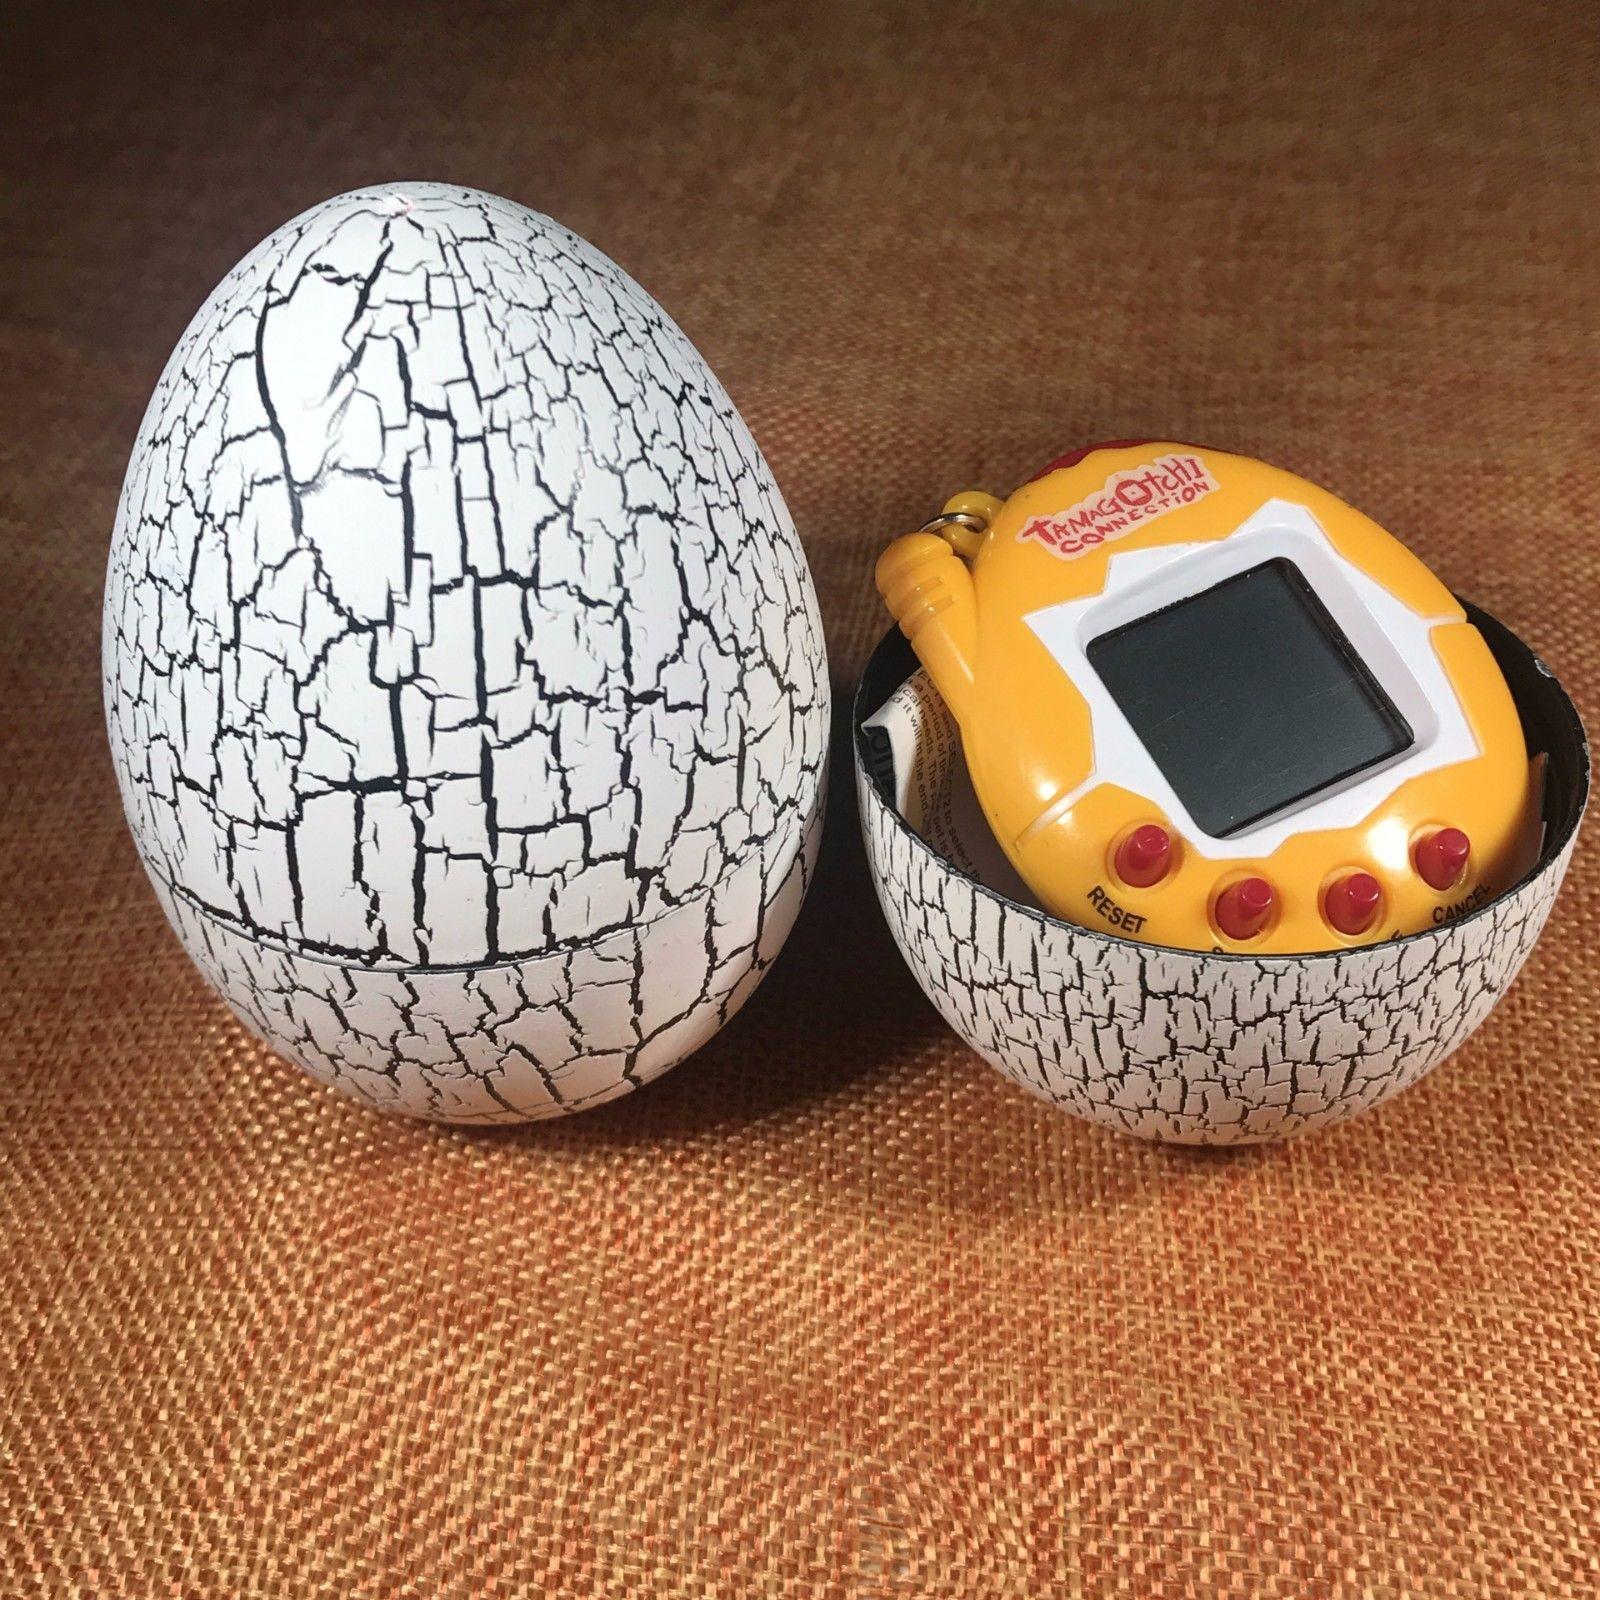 Фото 3 Игрушка электронный питомец Тамагочи в Яйце Динозавра Eggshell Game White